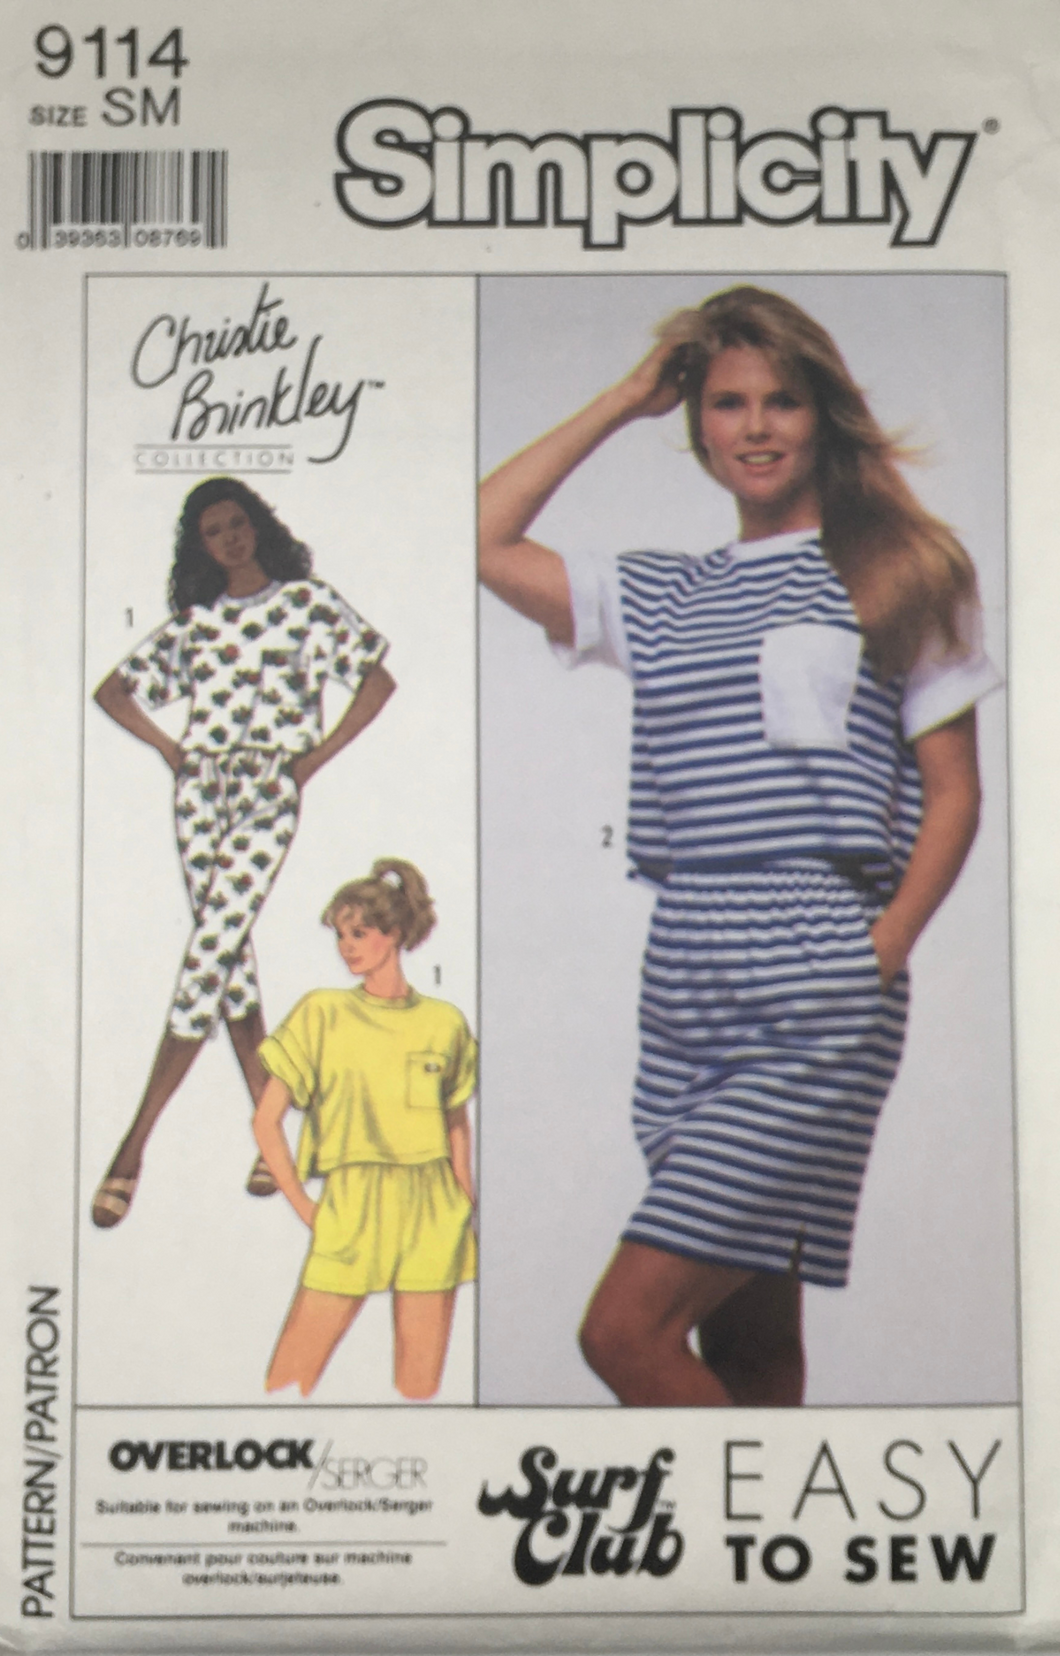 1989 Vintage Sewing Pattern: Simplicity 9114